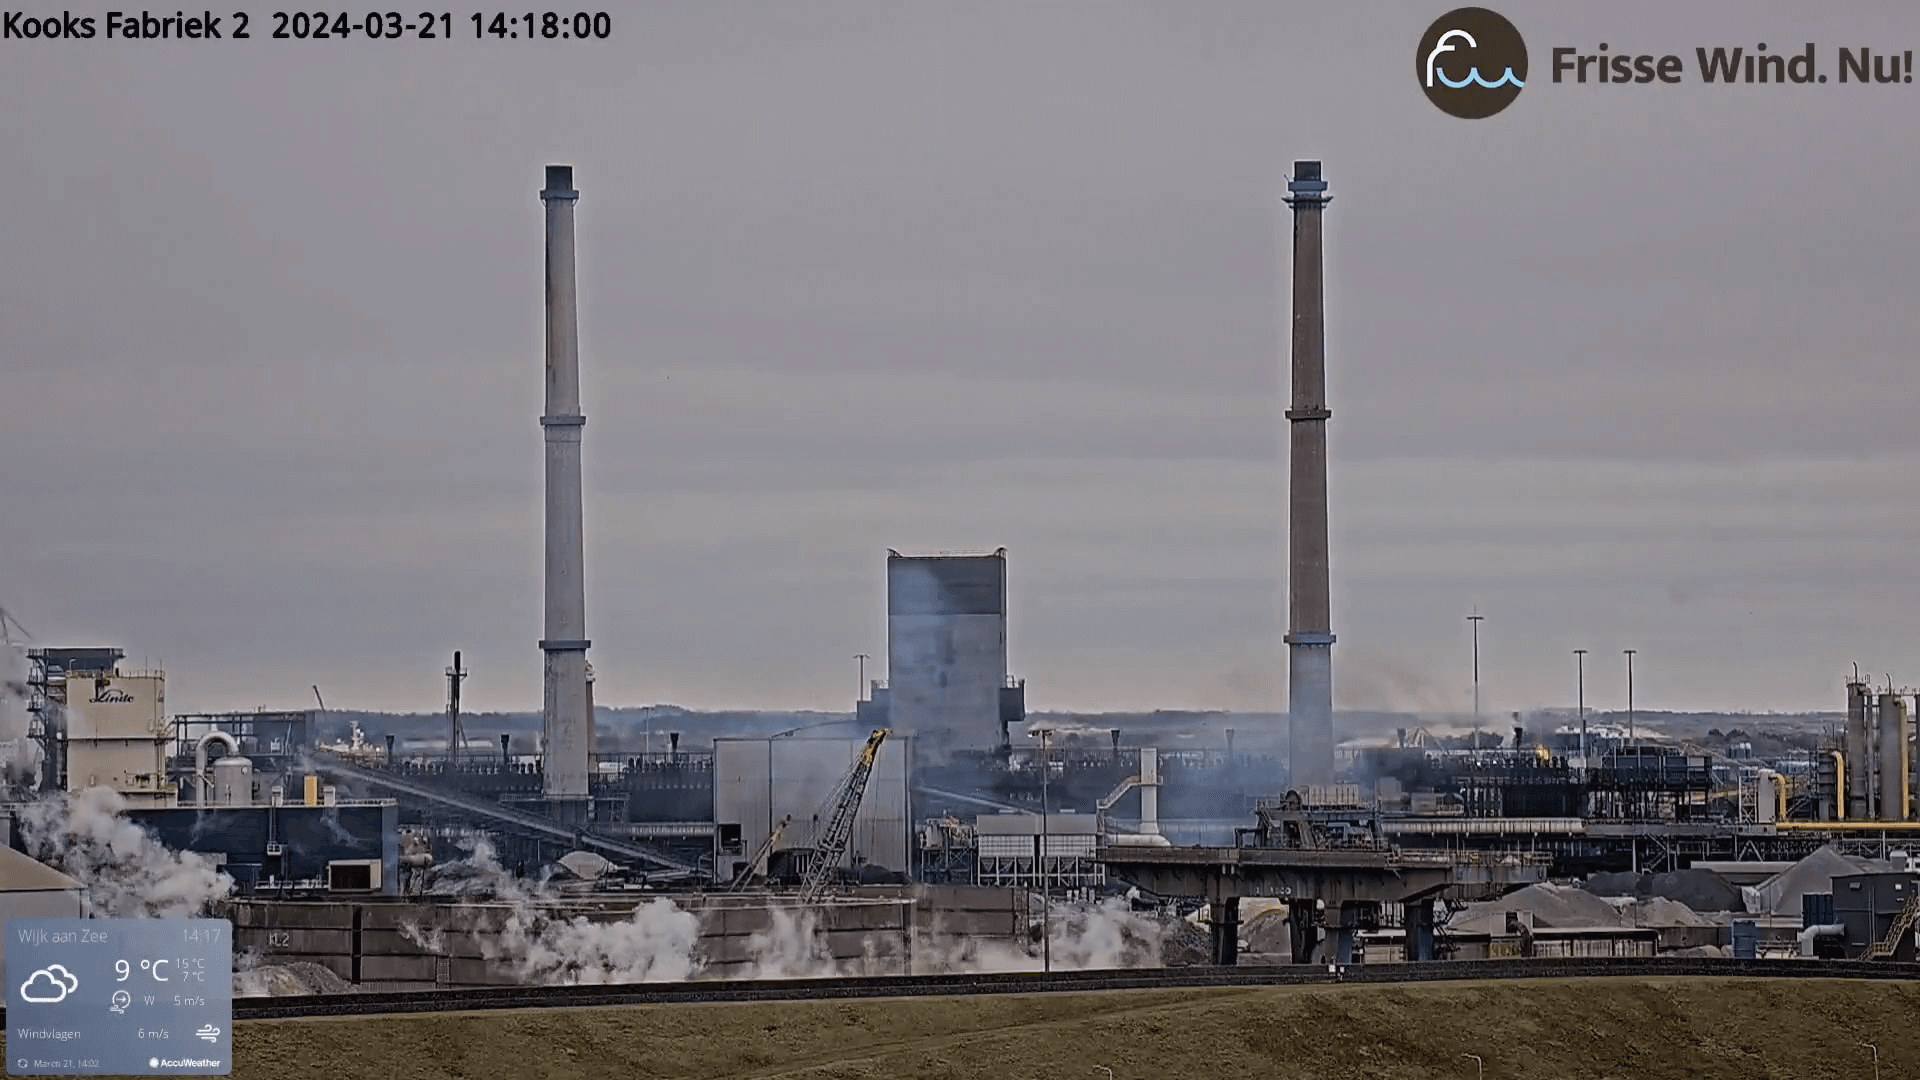 Incineration met bruine gifwolk, Kooks Fabriek 2 https://www.youtube.com/watch?v=0OVT8_ecRSg&ab_channel=FrisseWindNu (1:27)